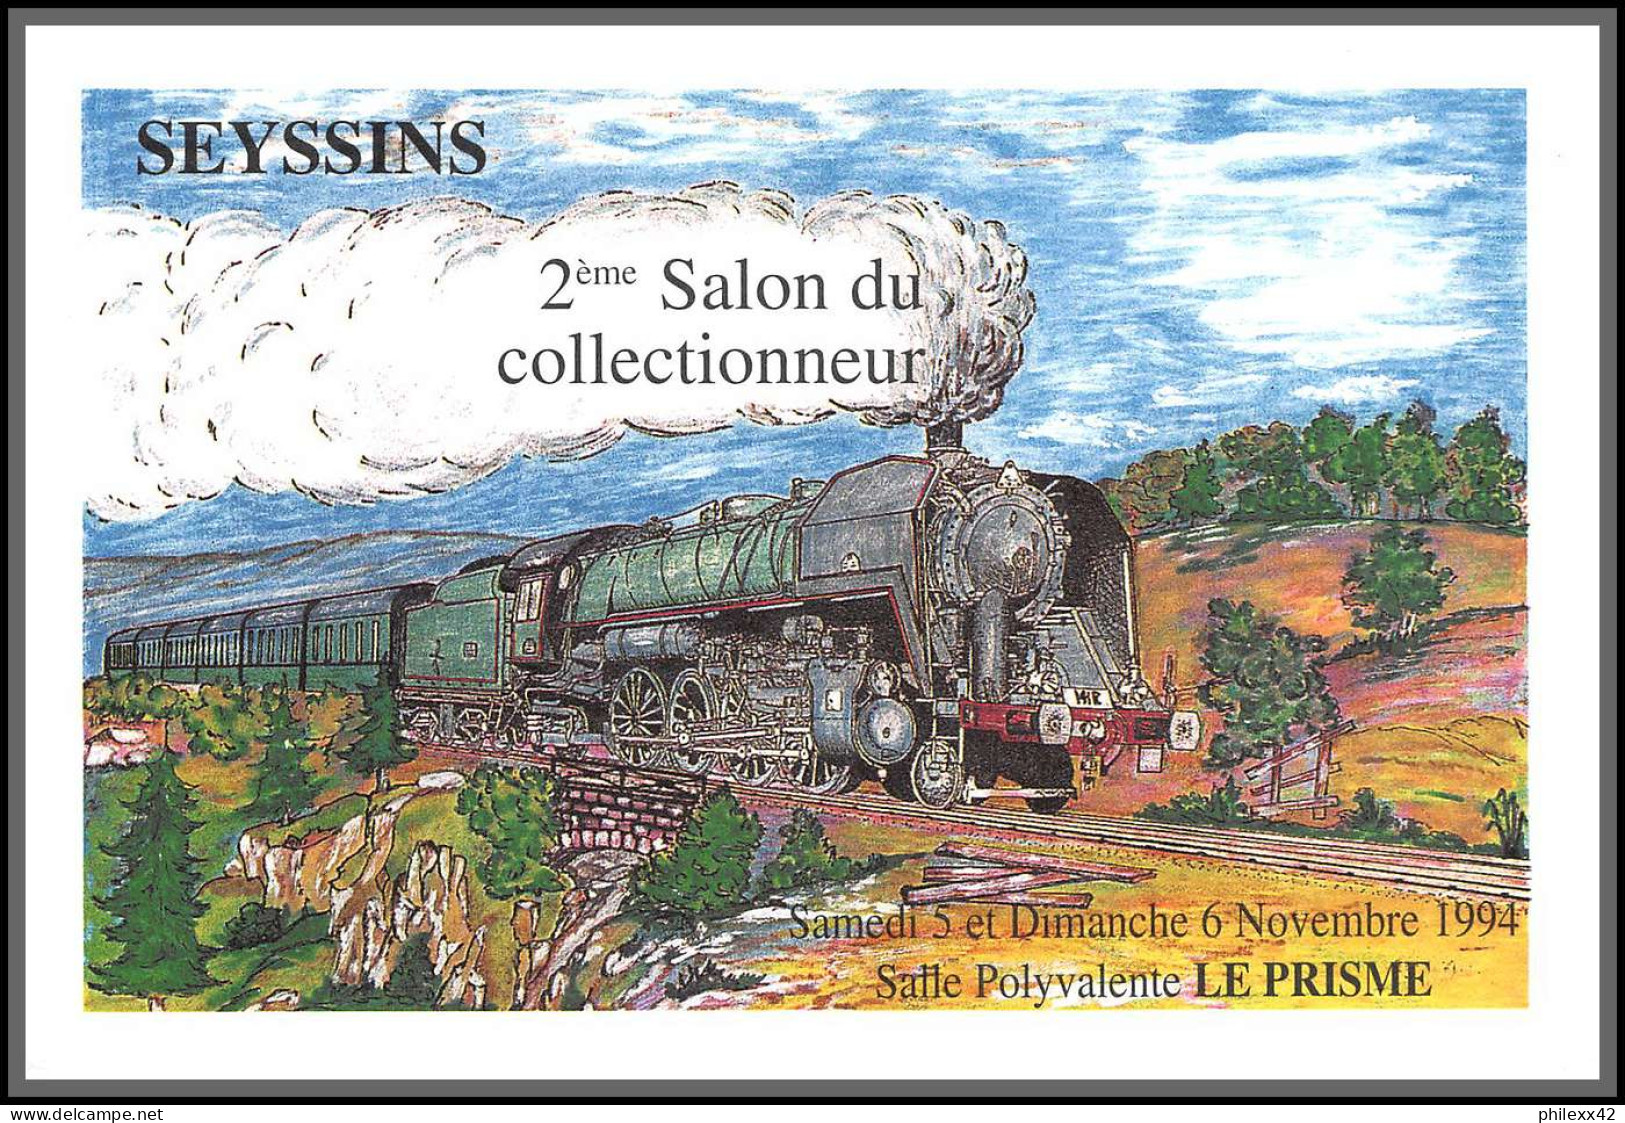 74241 Mixte Atm Briat 4/3/1997 M'tsangamouji Mayotte Echirolles Isère France Carte Postcard Colonies - Covers & Documents